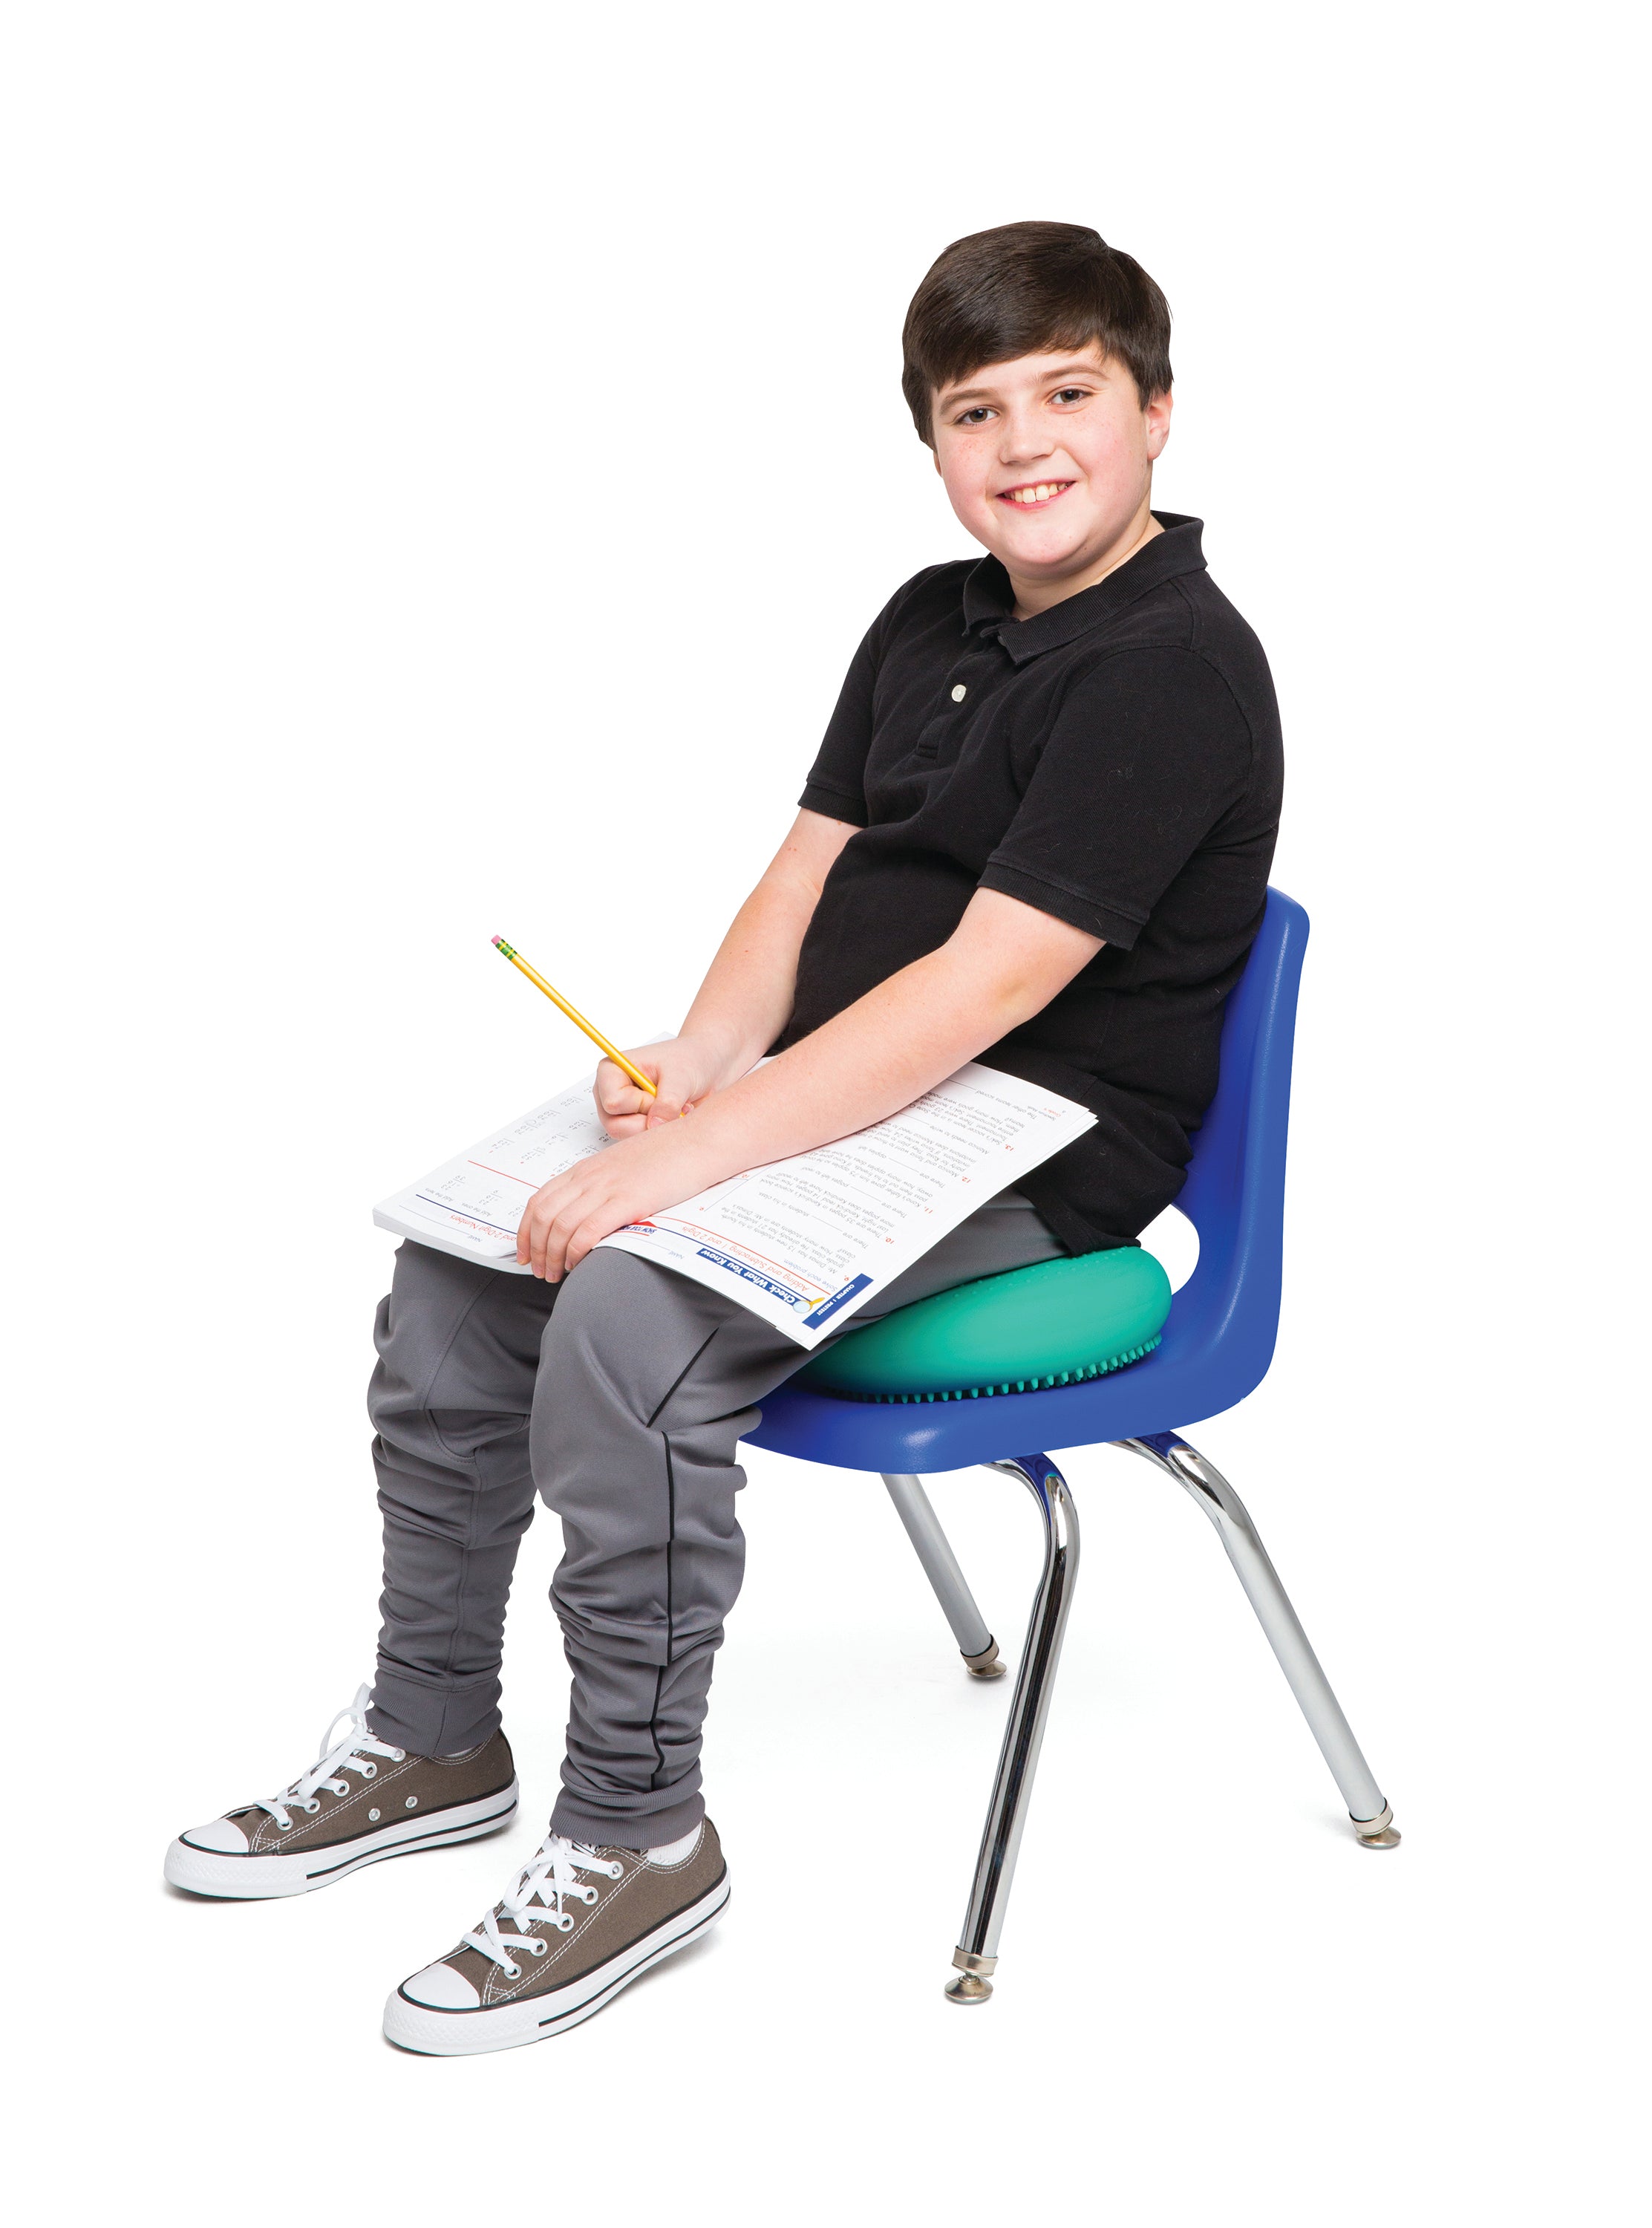 Sissel® Sitfit Wobble Cushion, Wiggle Seat Flexible Seating, Blue 33cm,  ADHD Chair, Sensory Seat for Classroom, Kids Fidget Chair Cushion,  Stability